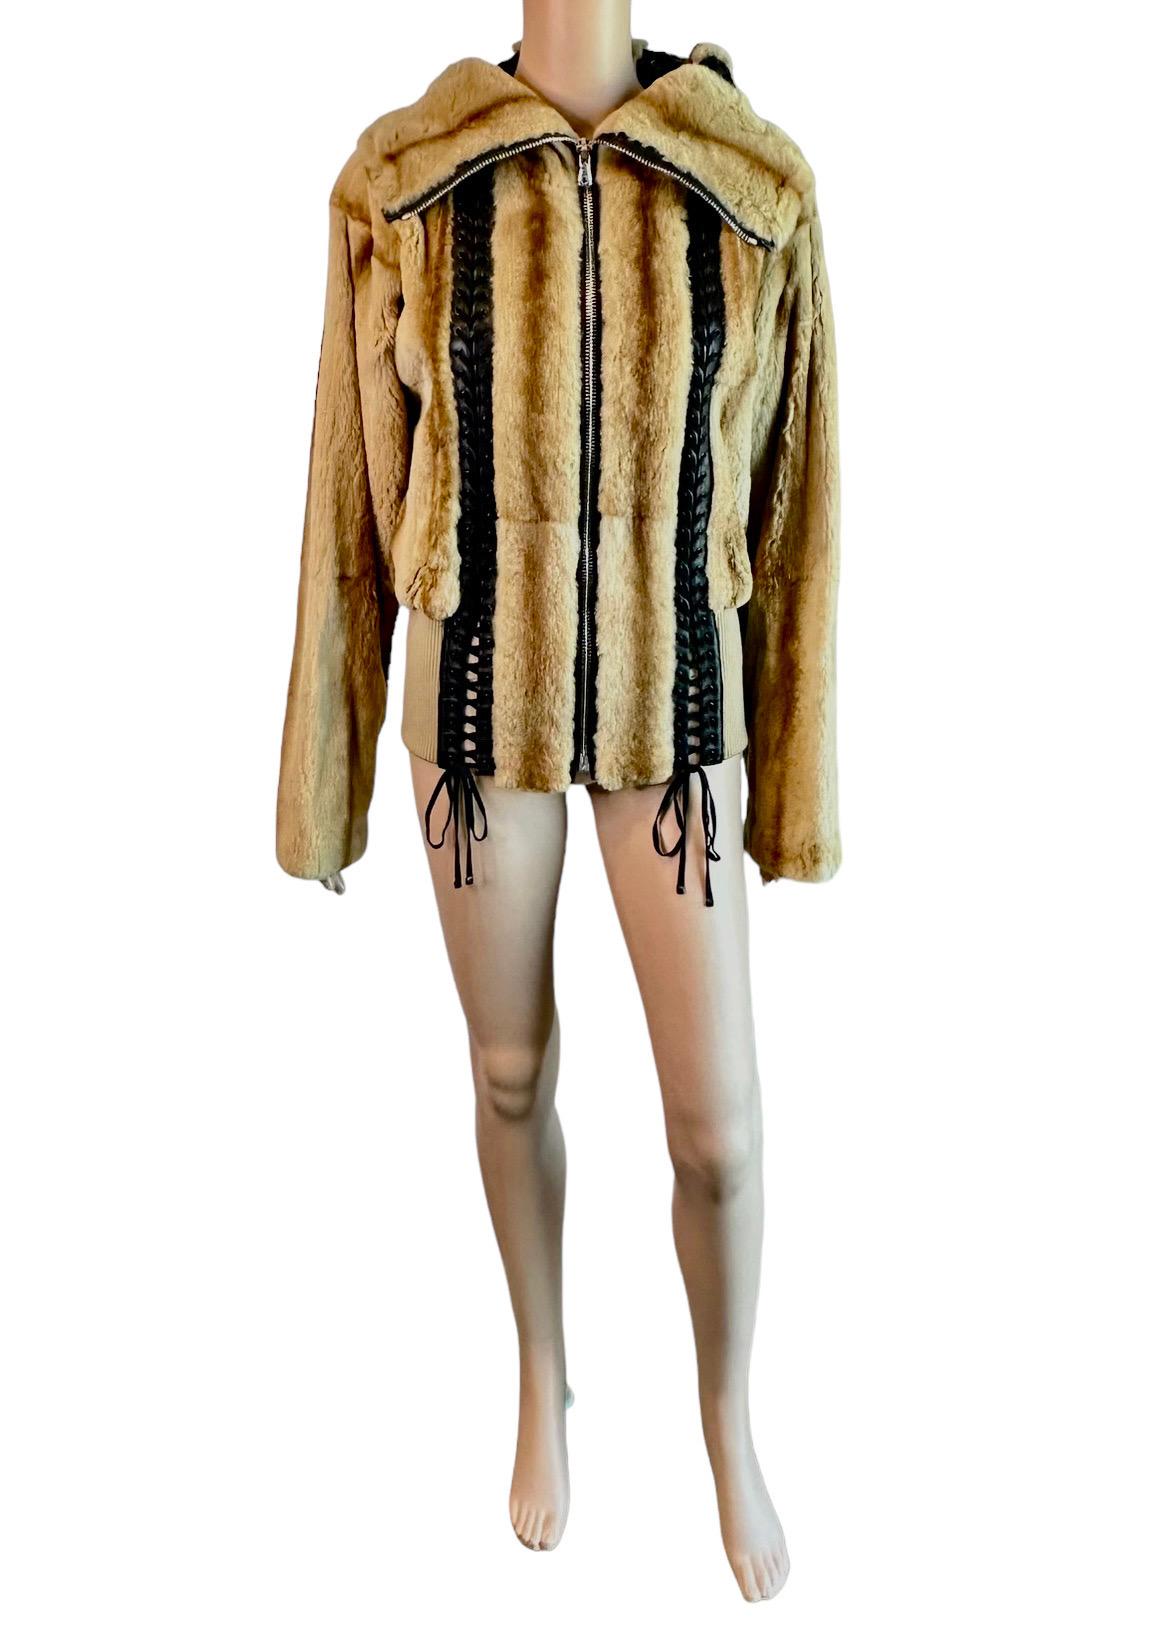 Dolce & Gabbana S/S 2003 Bondage Lace Up Weasel Fur Jacket Coat For Sale 10